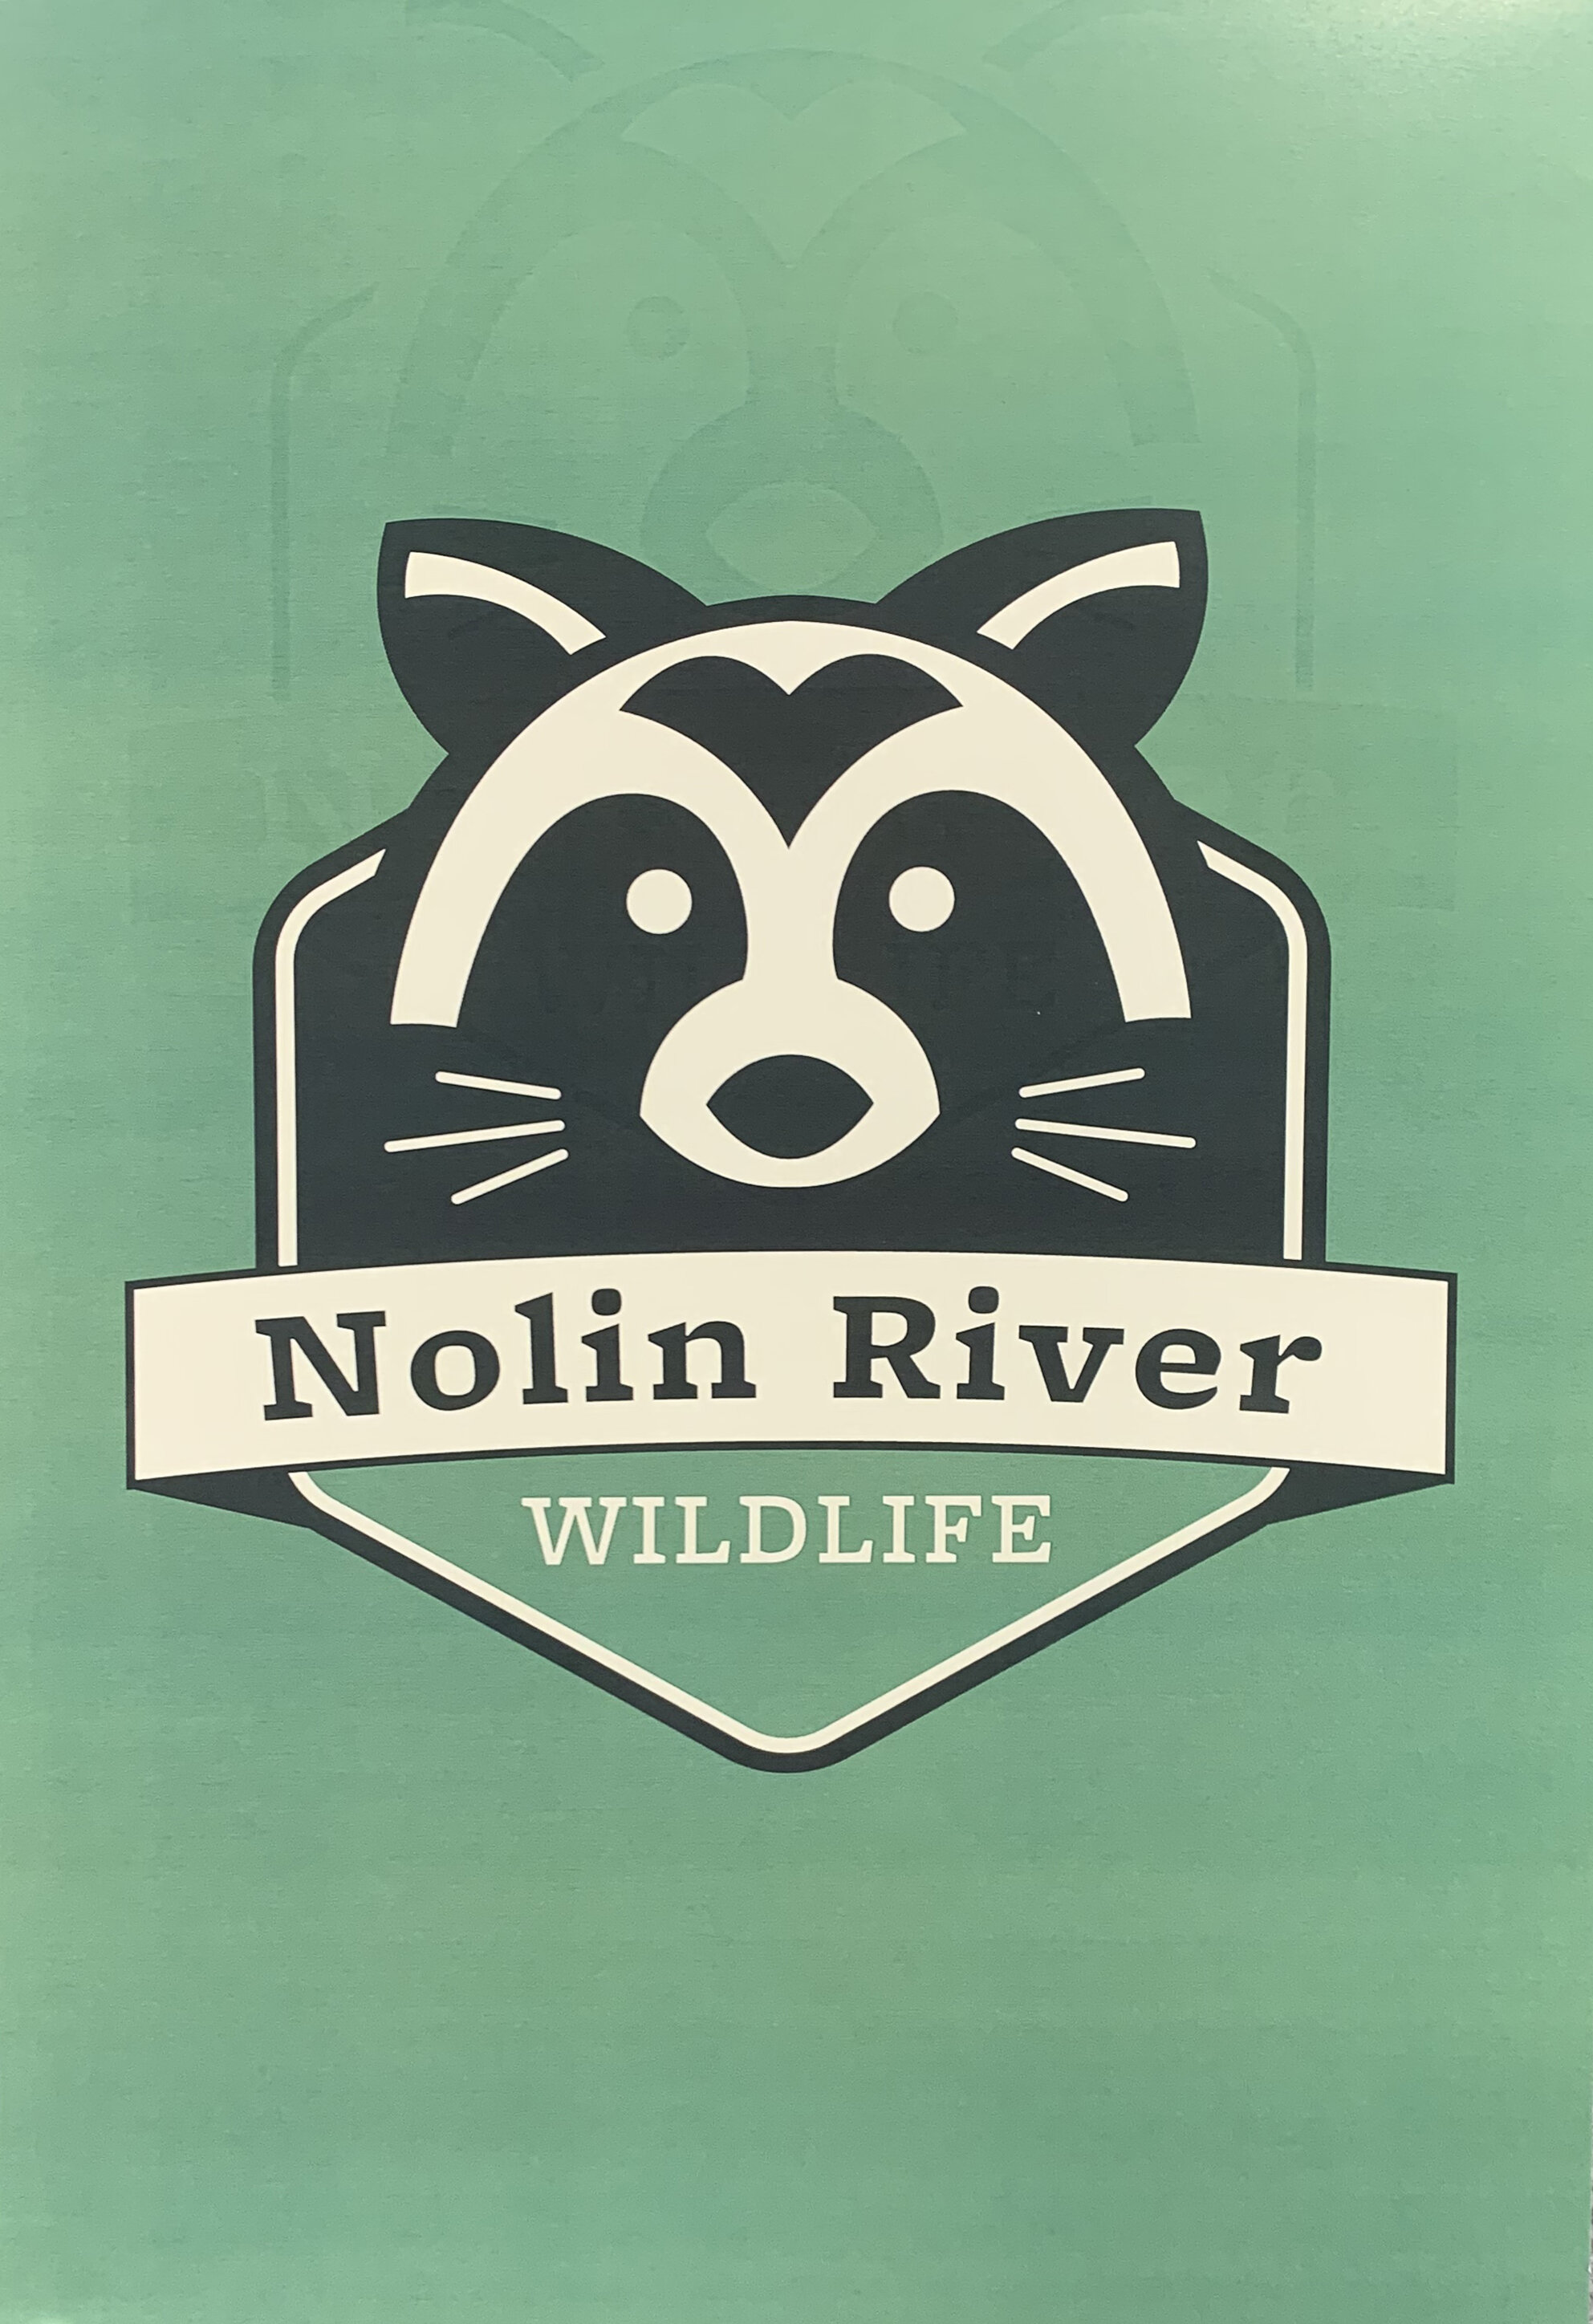 Daniel Garcia Lopez, "Nolin River Wildlife Logo"